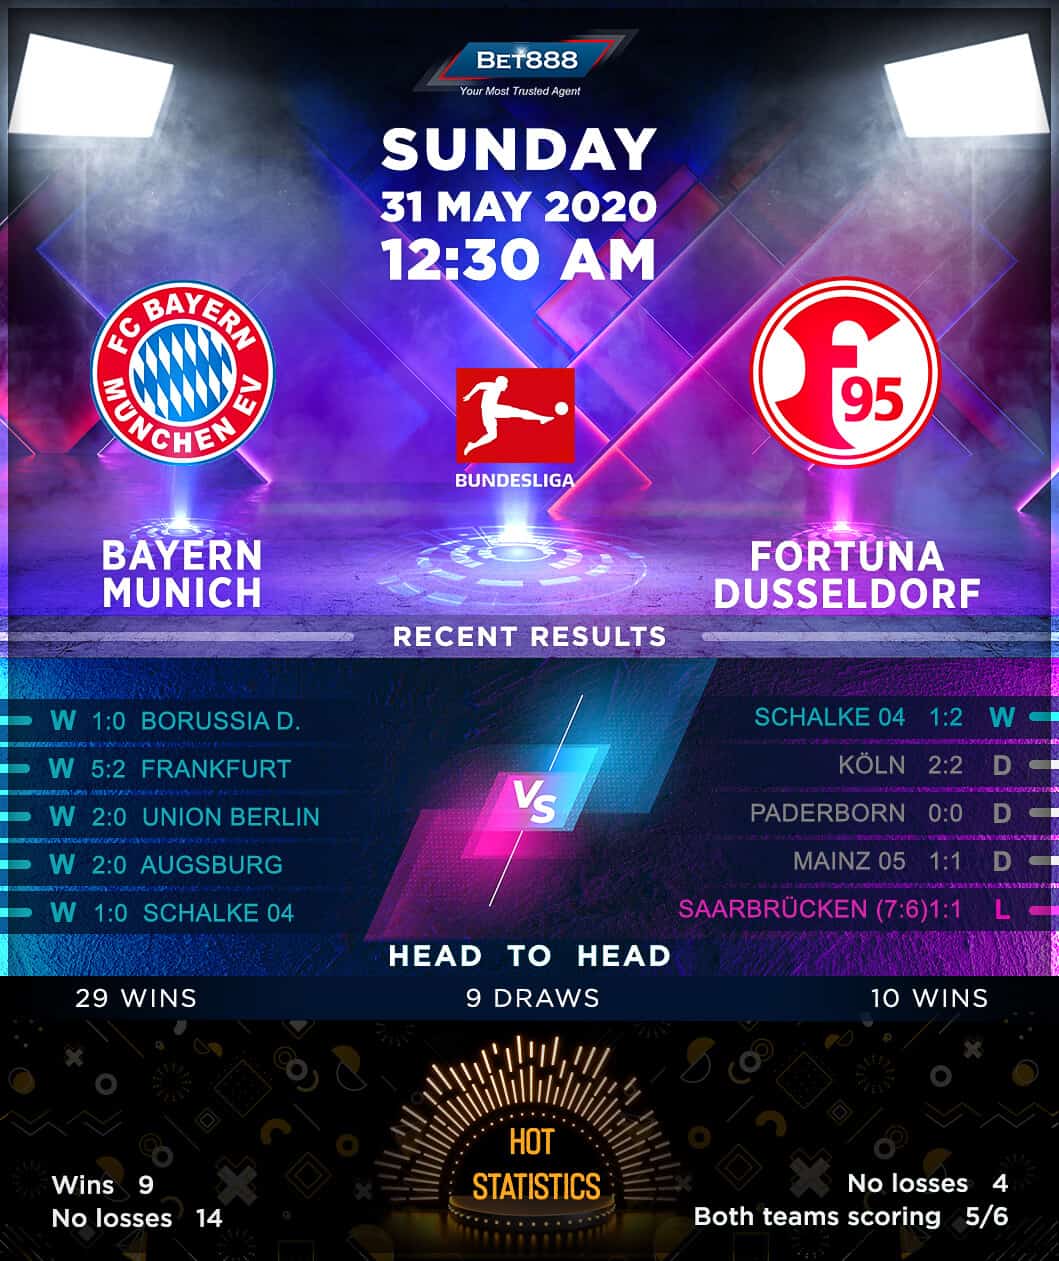 Bayern Munich vs Fortuna Dusseldorf 31/05/20